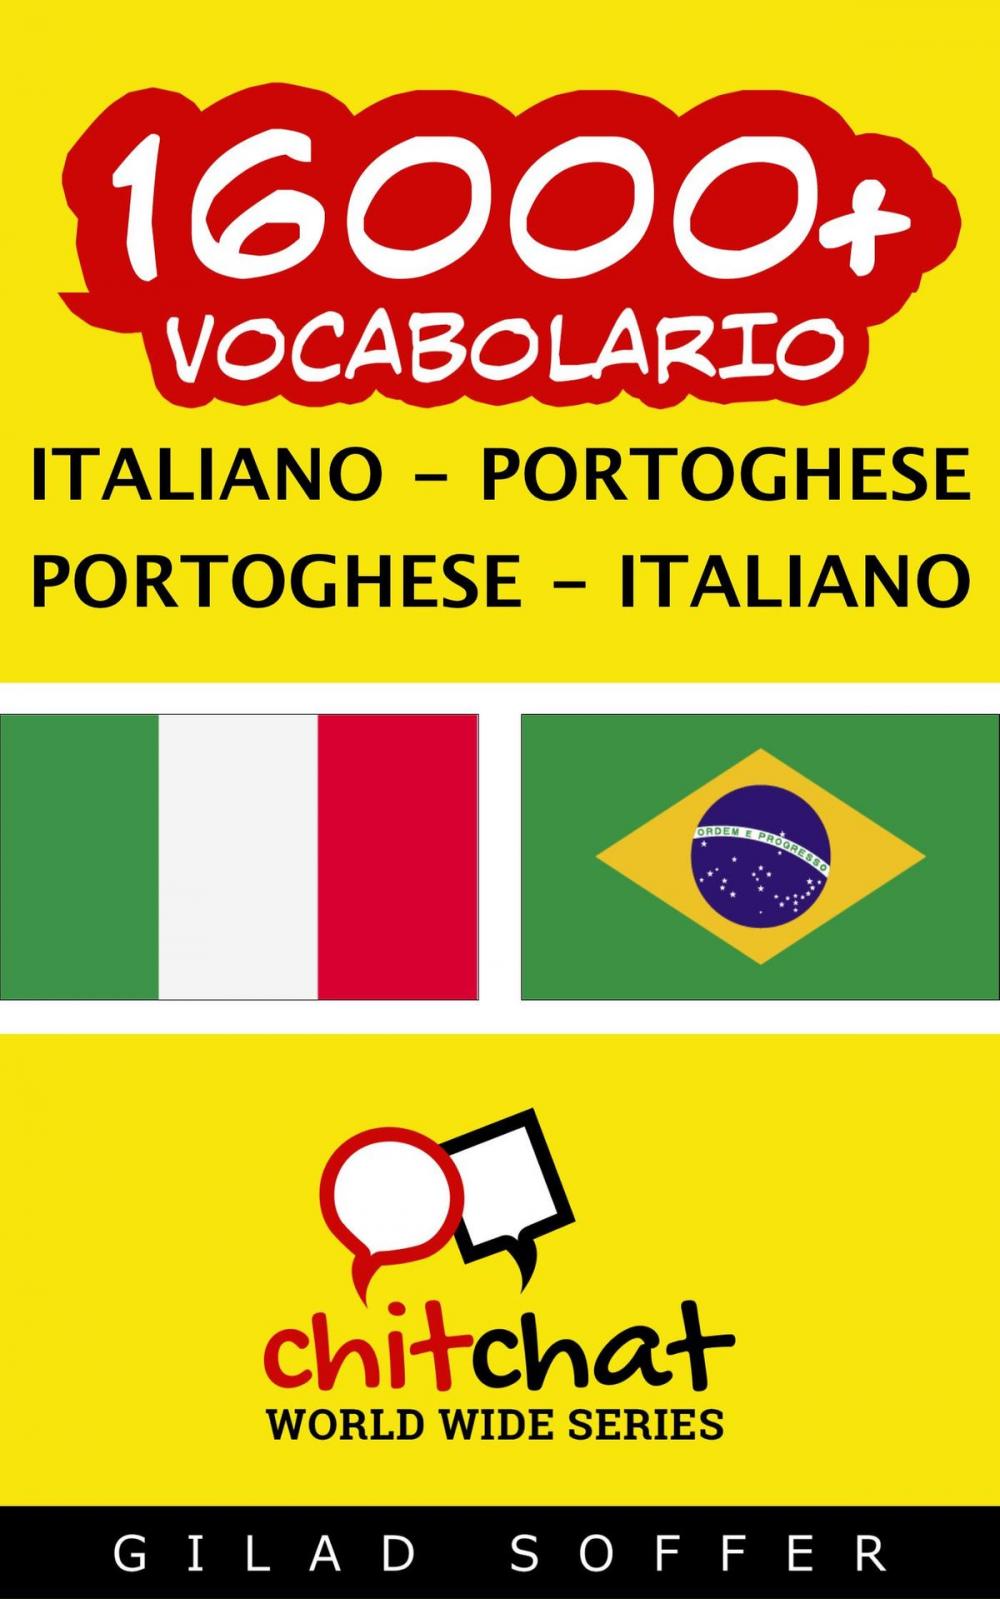 Big bigCover of 16000+ vocabolario Italiano - Portoghese